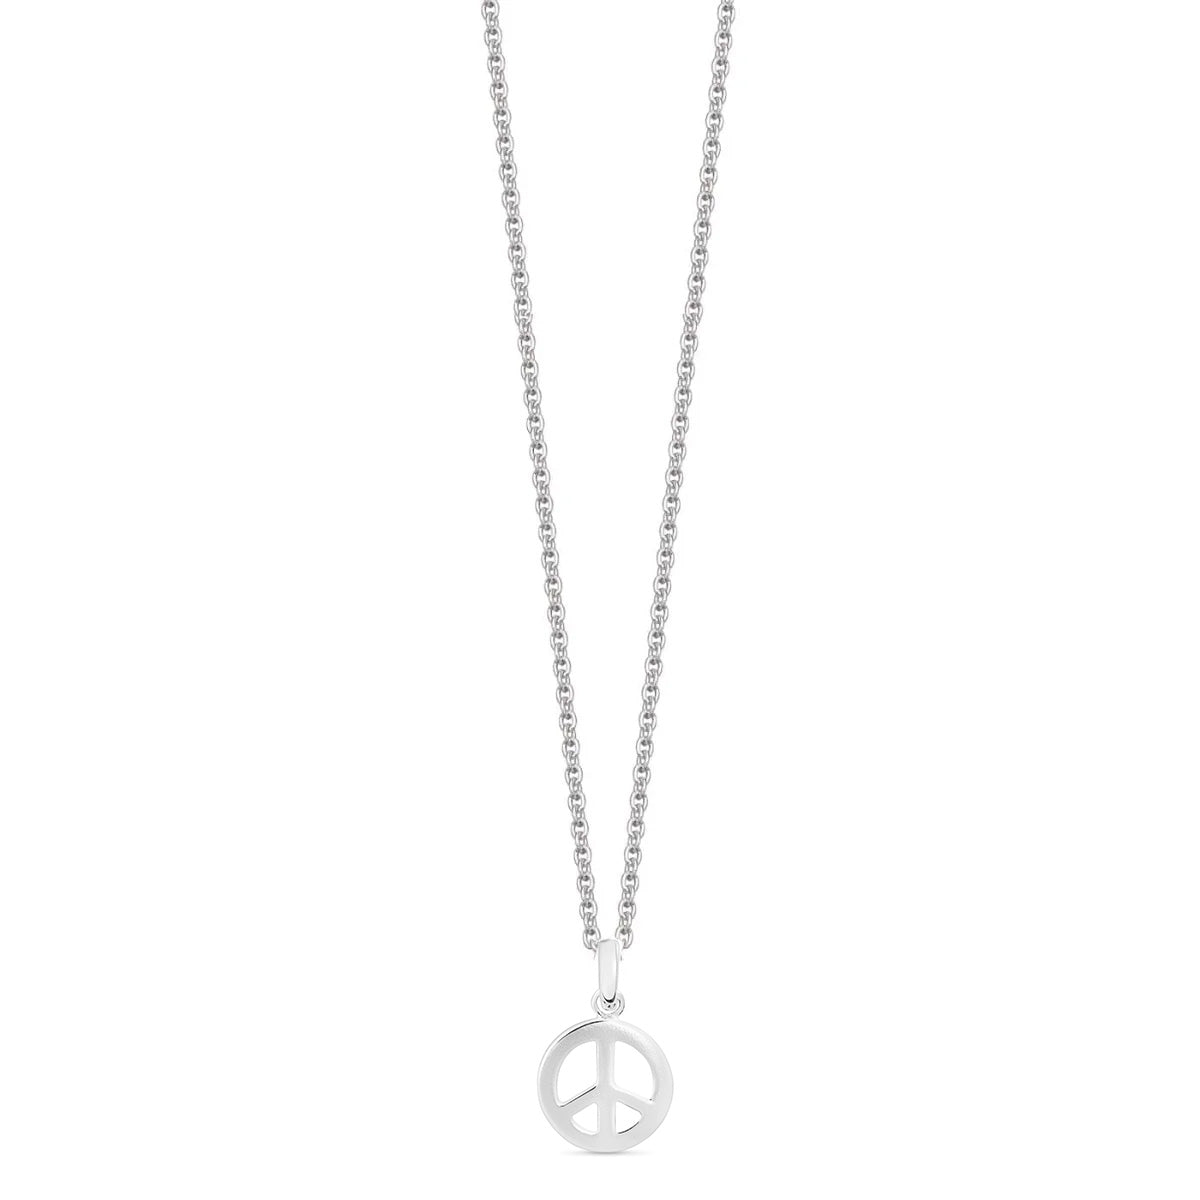 Mini Sterling Silver Peace Necklace